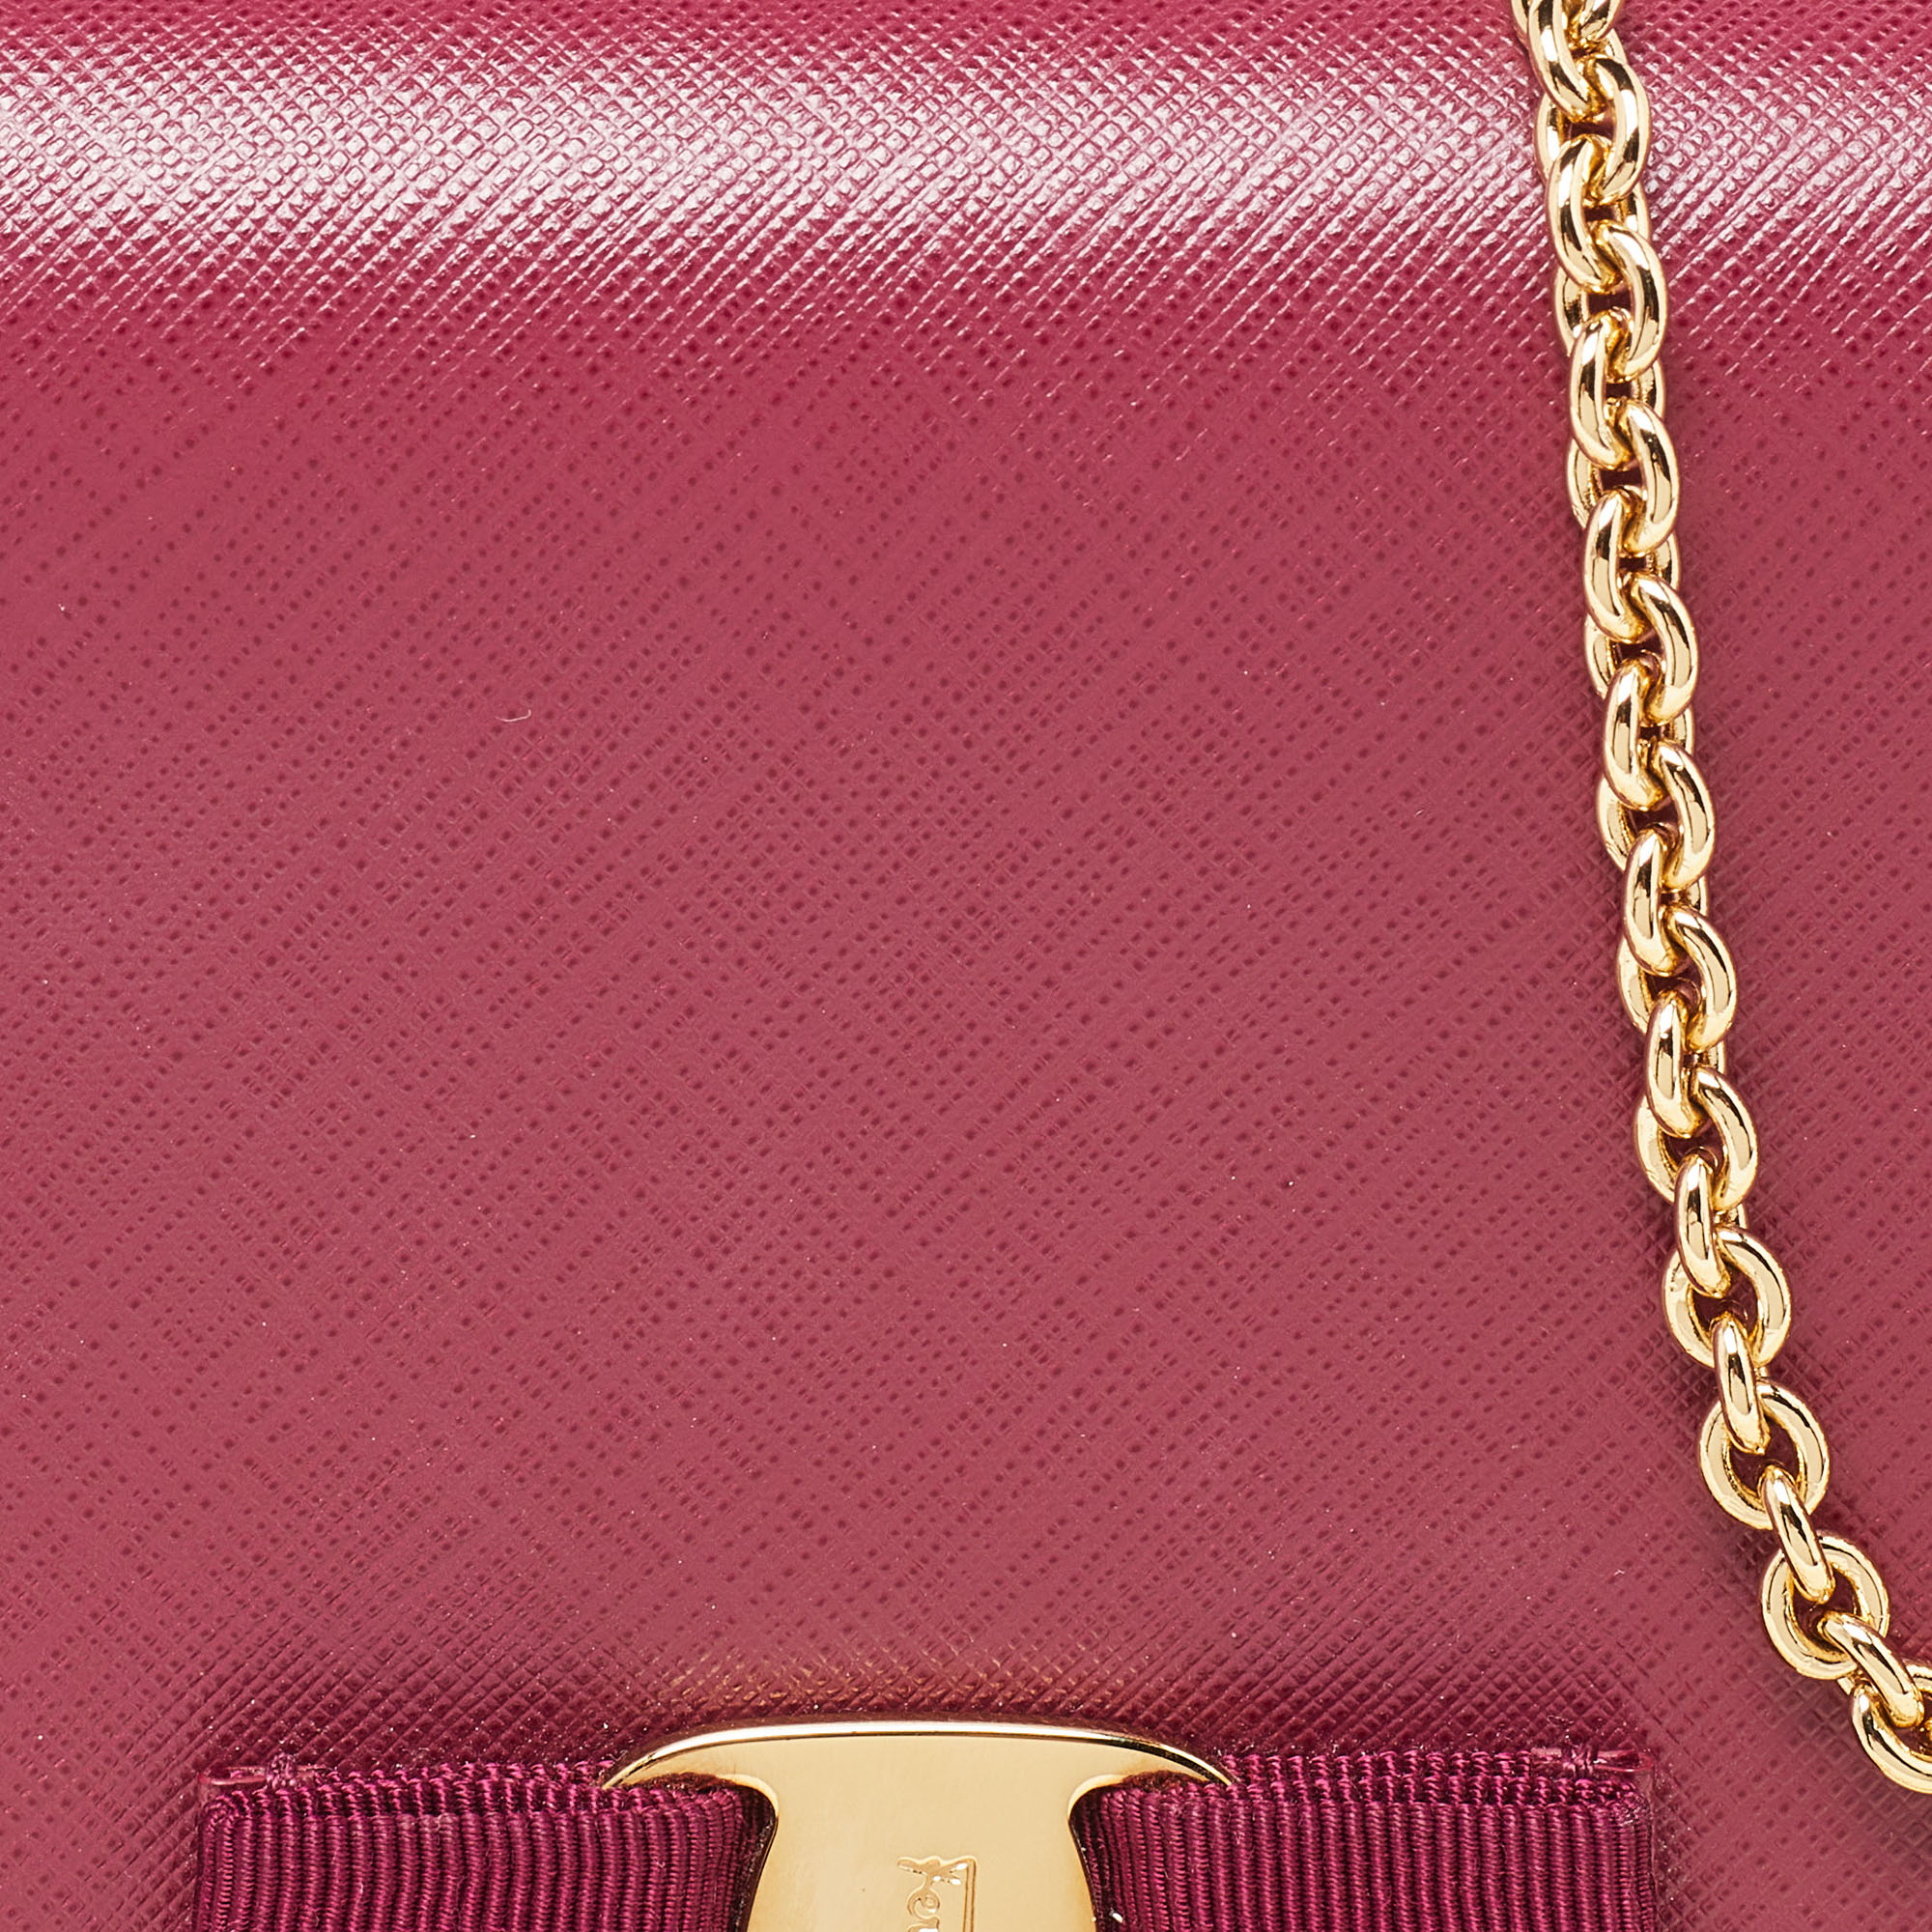 Salvatore Ferragamo Dark Pink Leather Vara Bow Chain Bag